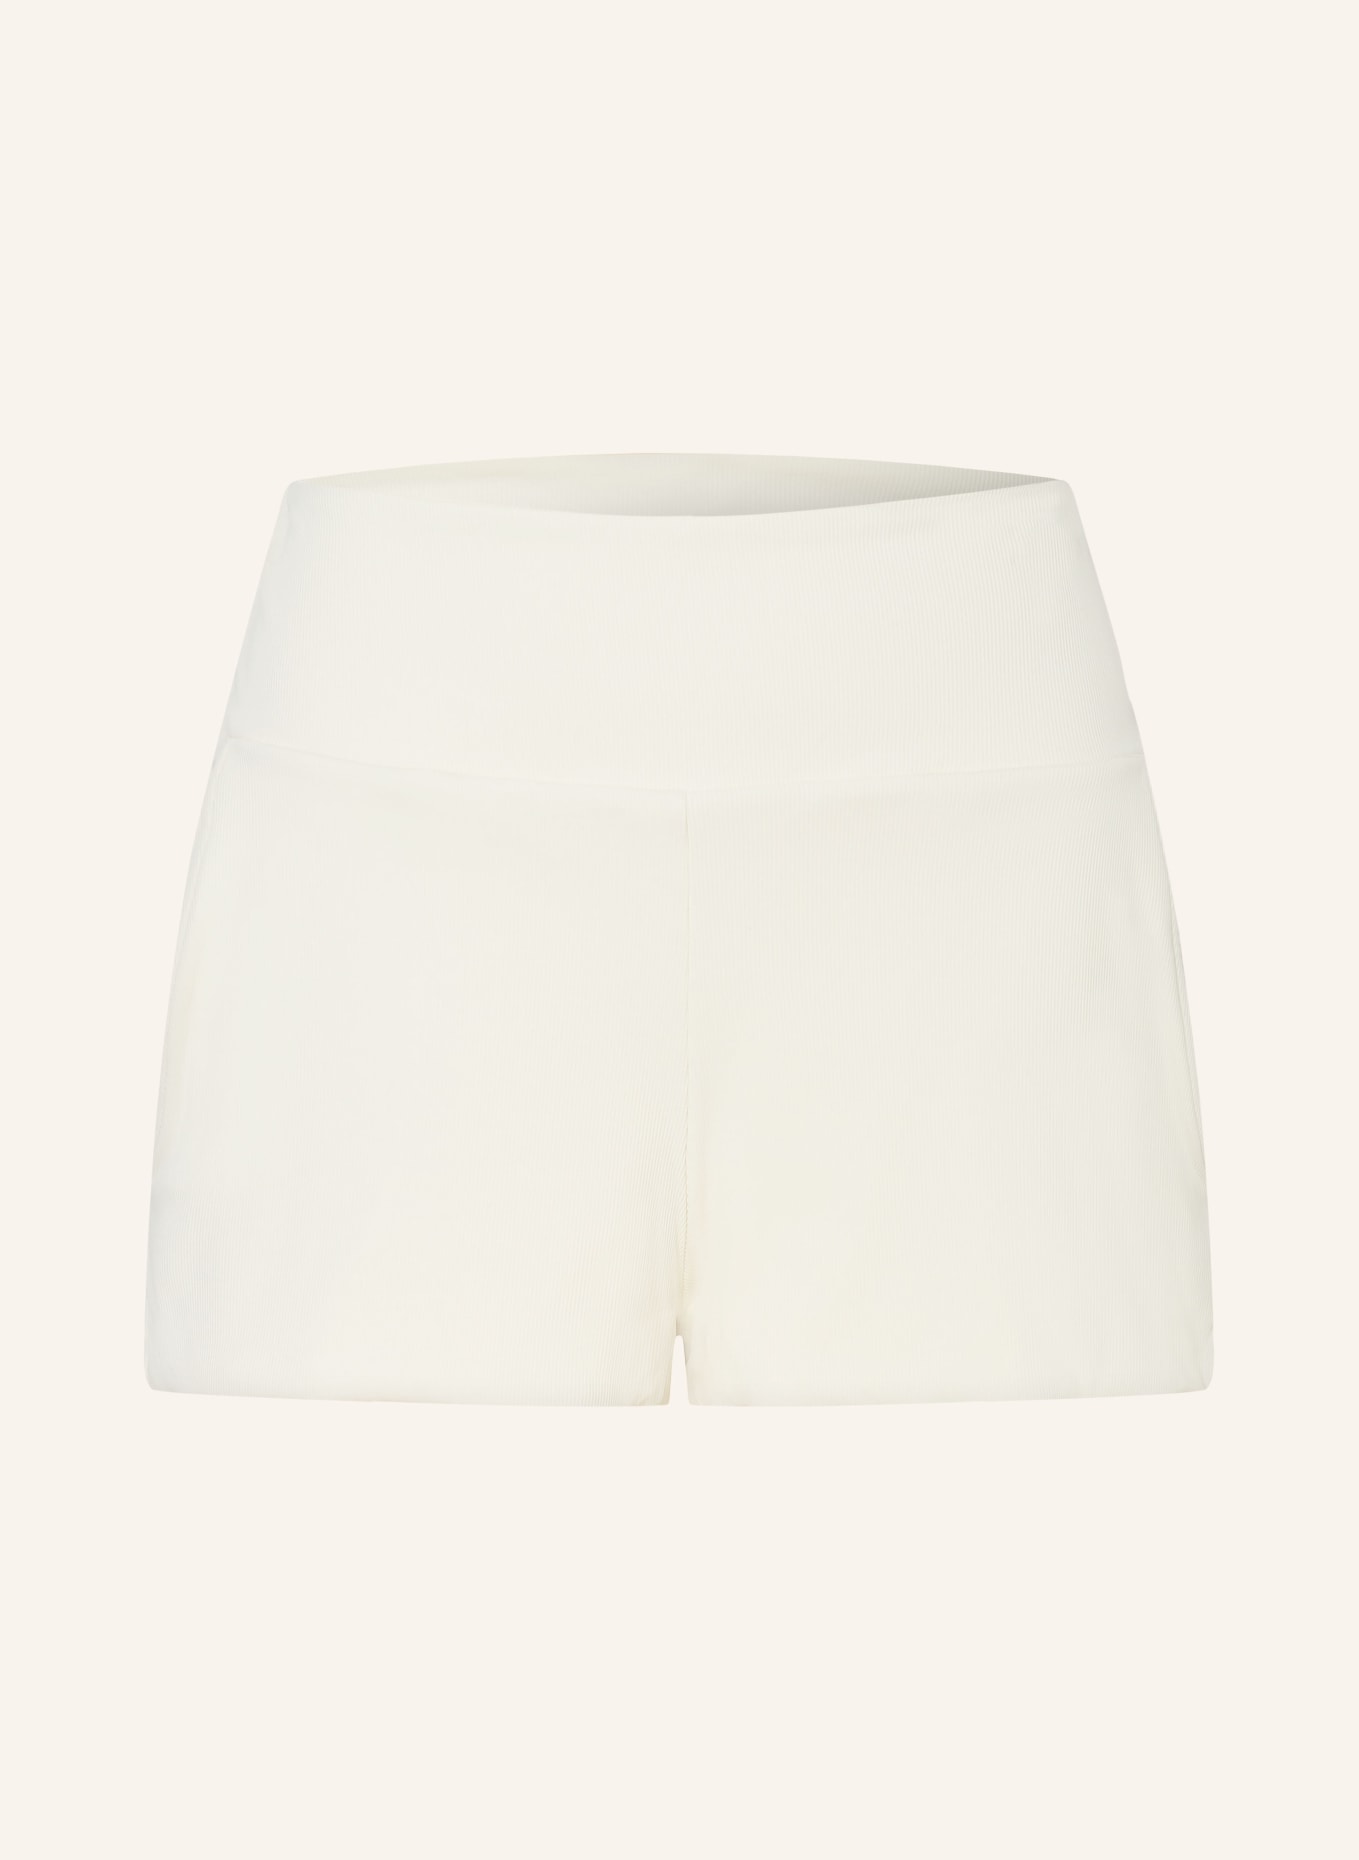 MYMARINI Panty bikini bottoms with UV protection 50+, Color: ECRU (Image 1)